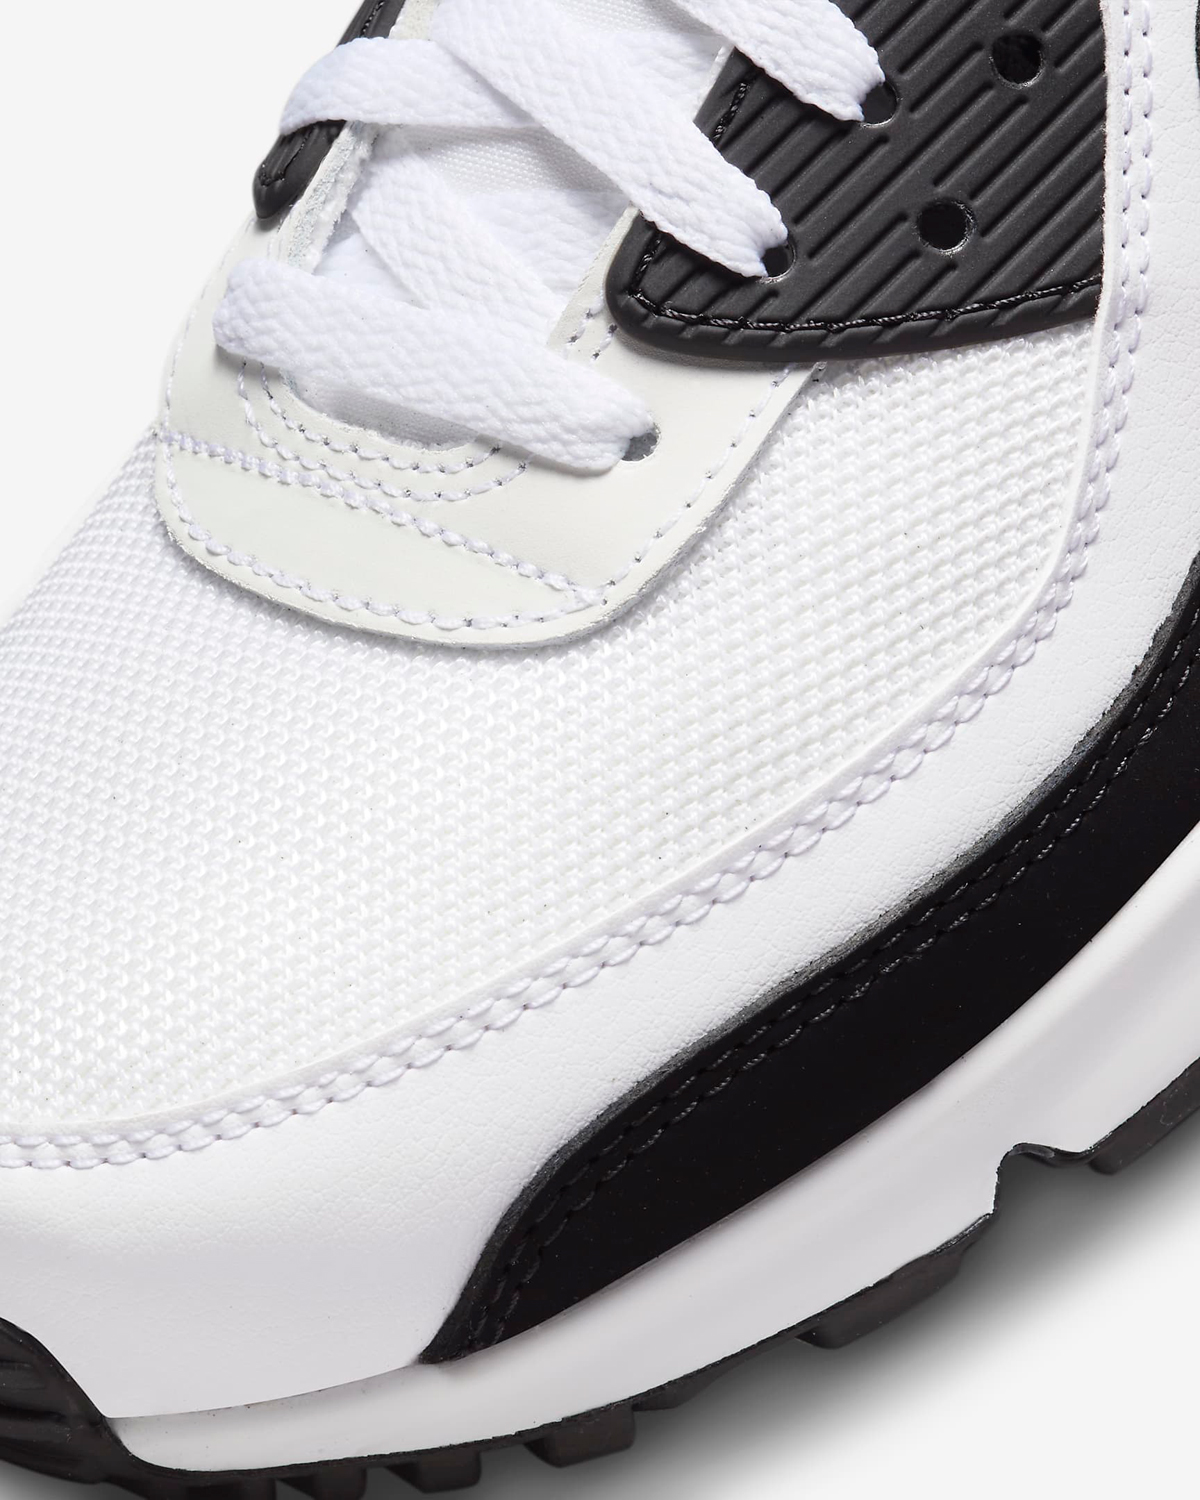 Nike-Air-Max-90-White-Black-Release-Date-7